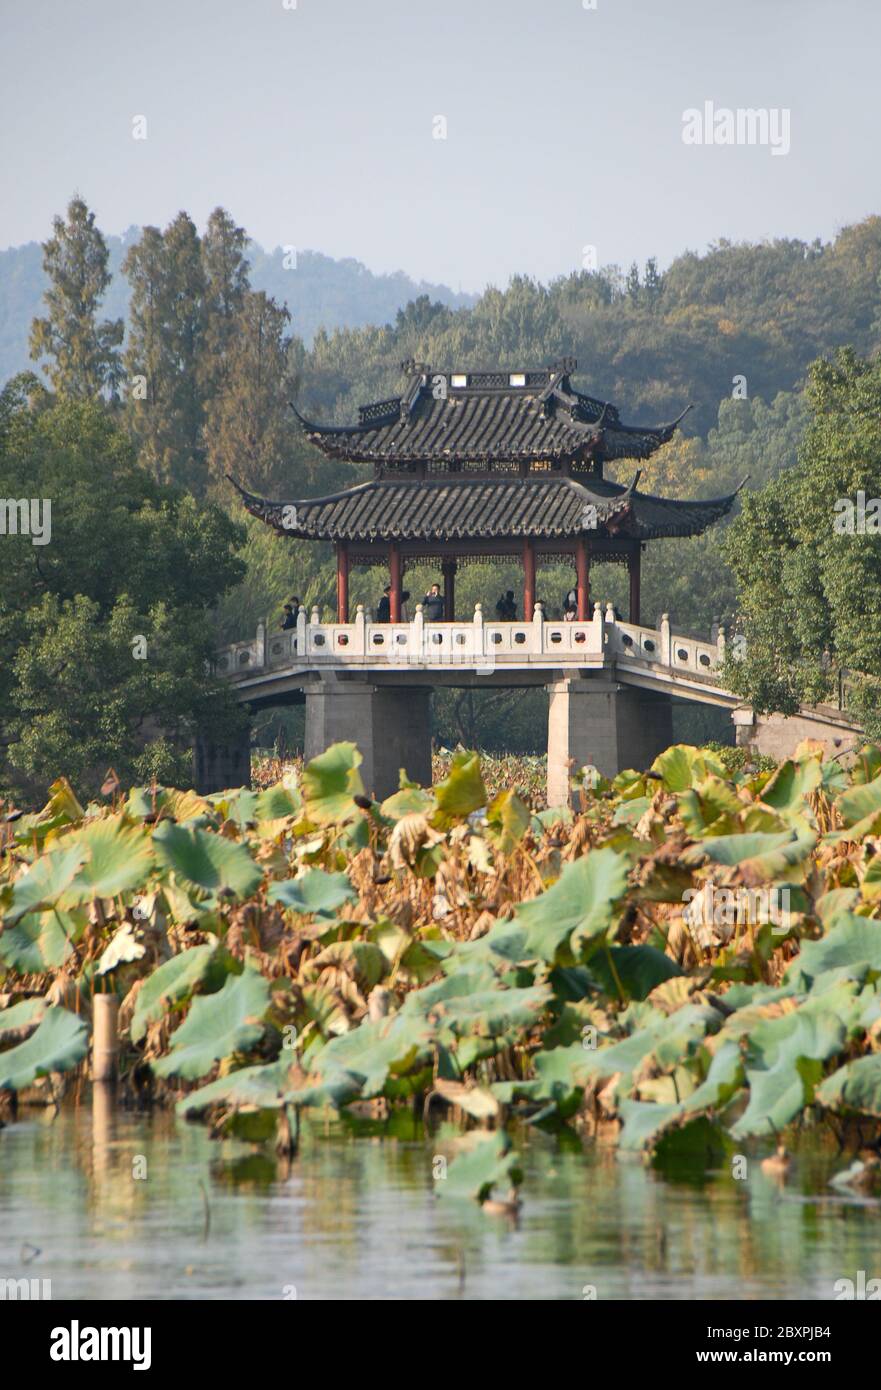 West Lake (Xi Hu) in Hangzhou, Zhejiang Province, China. Yudai bridge on West Lake, one of the famous symbols of Hangzhou city. Stock Photo